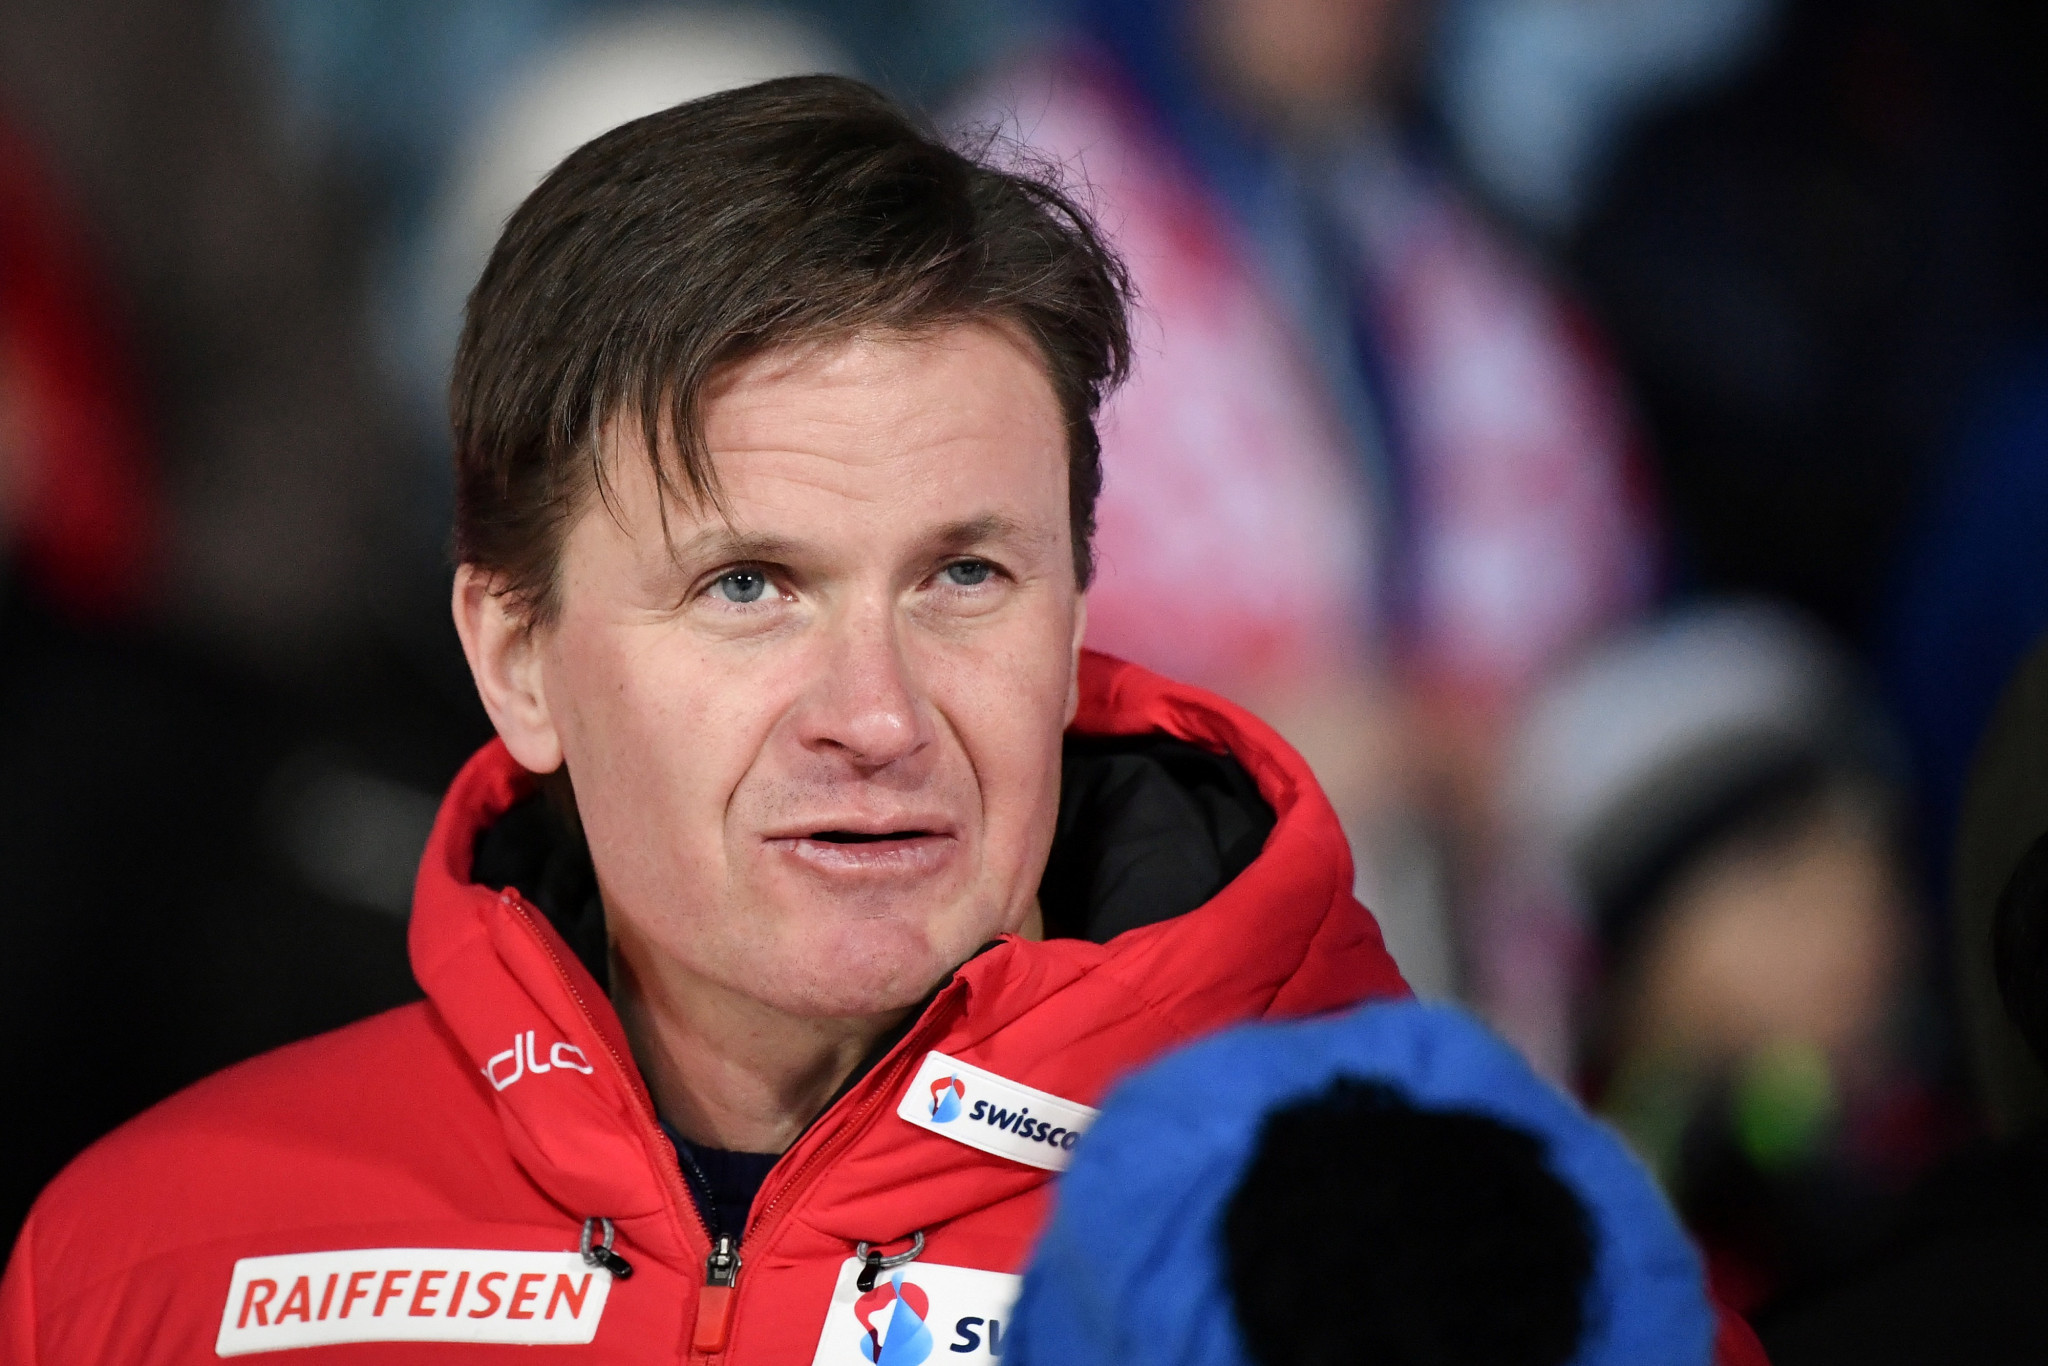 Urs Lehmann has led Swiss-Ski since 2008 ©Getty Images